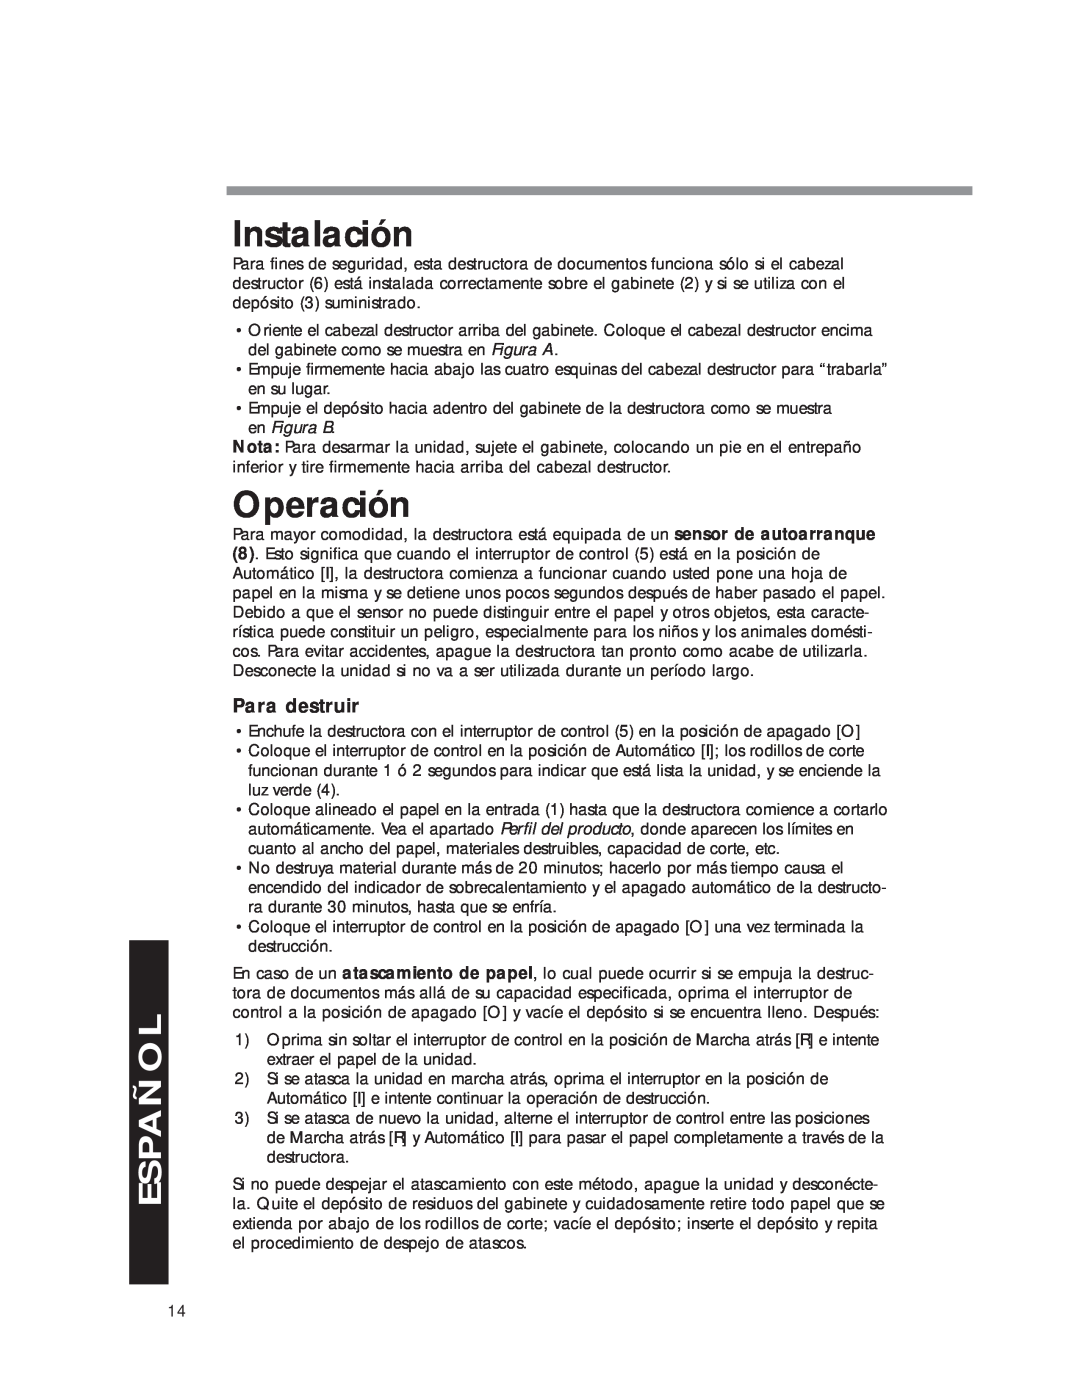 Fellowes DM8C manual Instalación, Operación, Para destruir, Español 